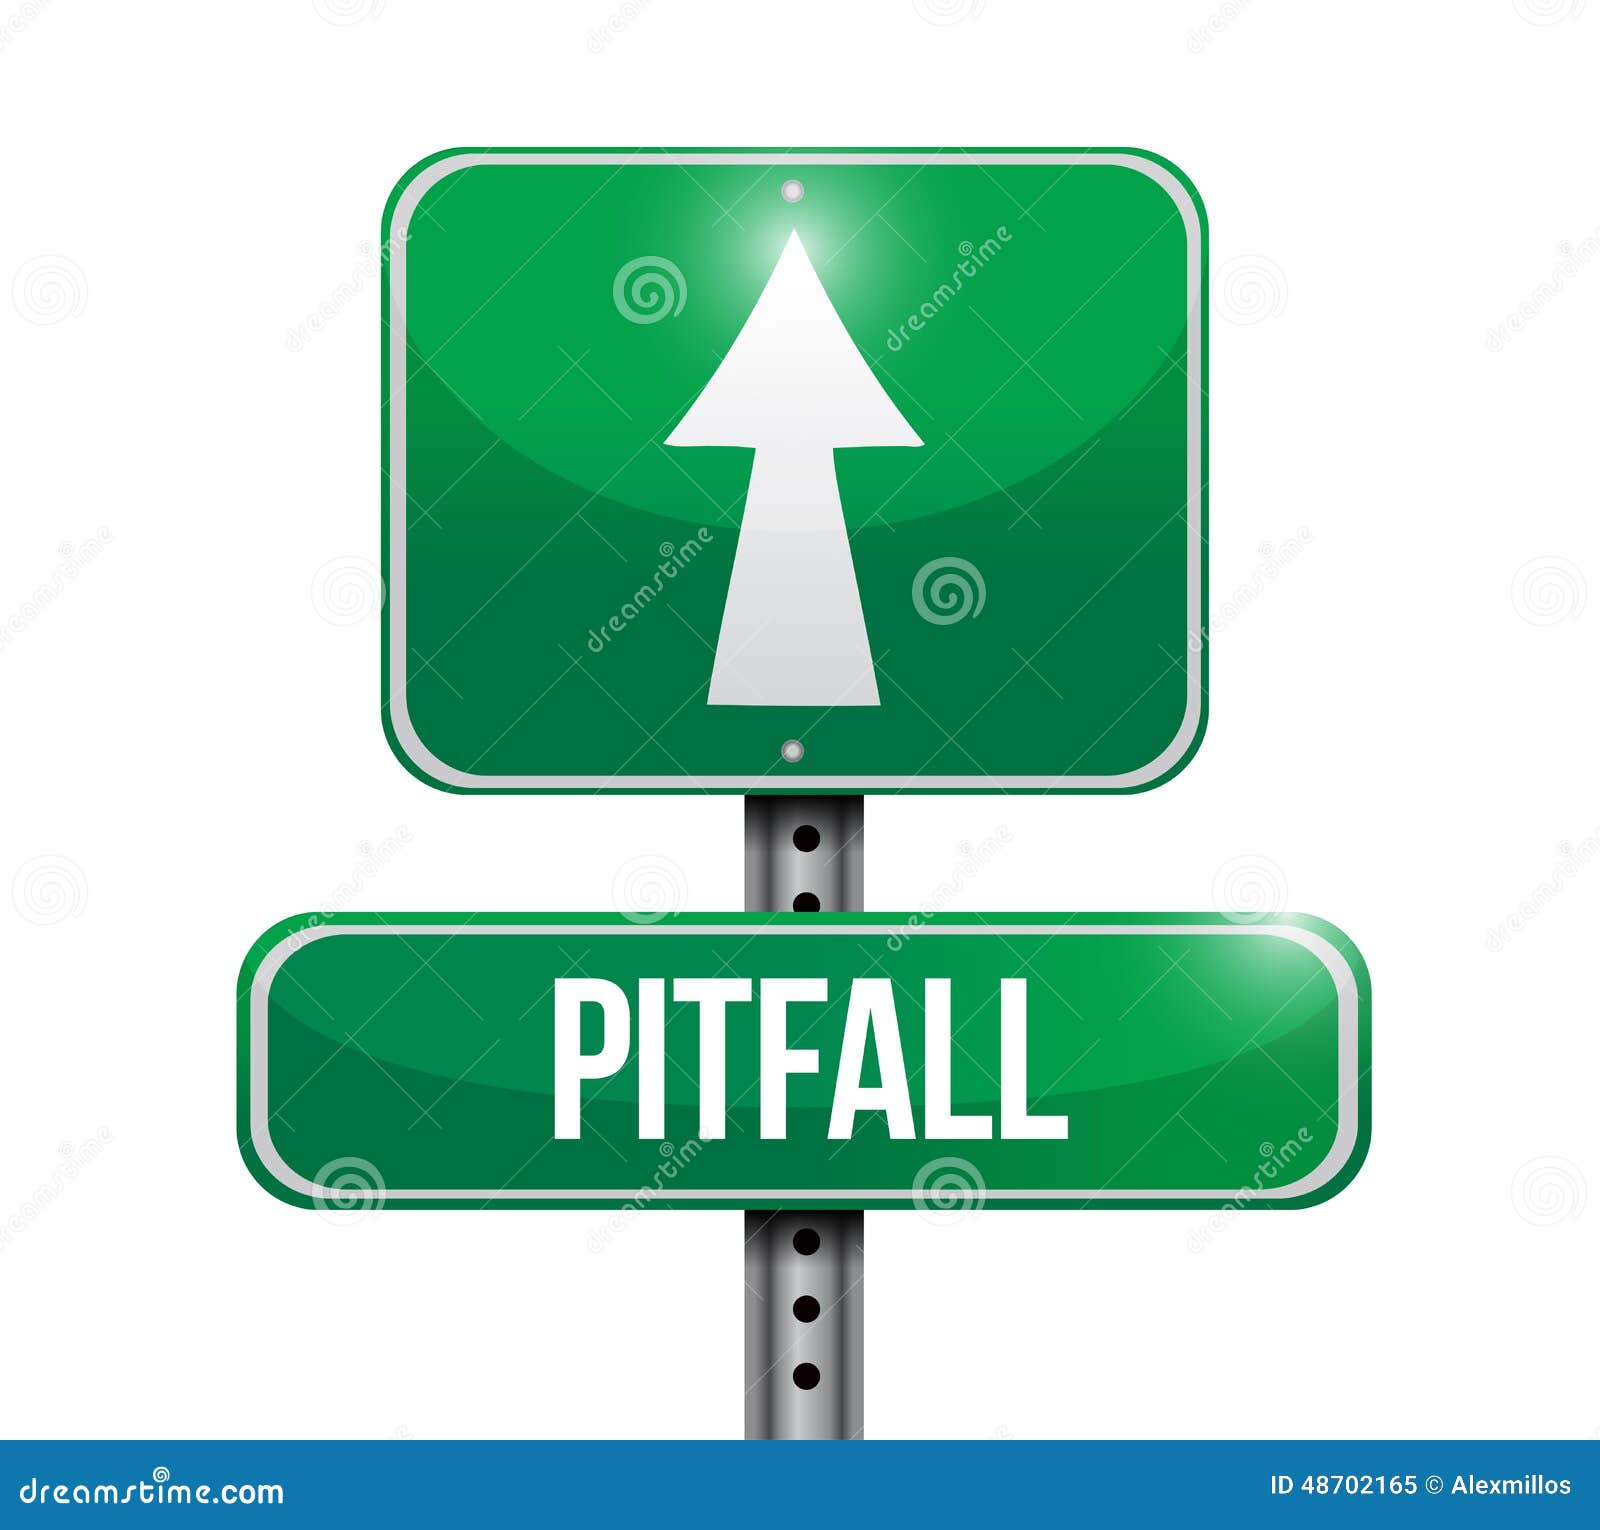 pitfall street sign  